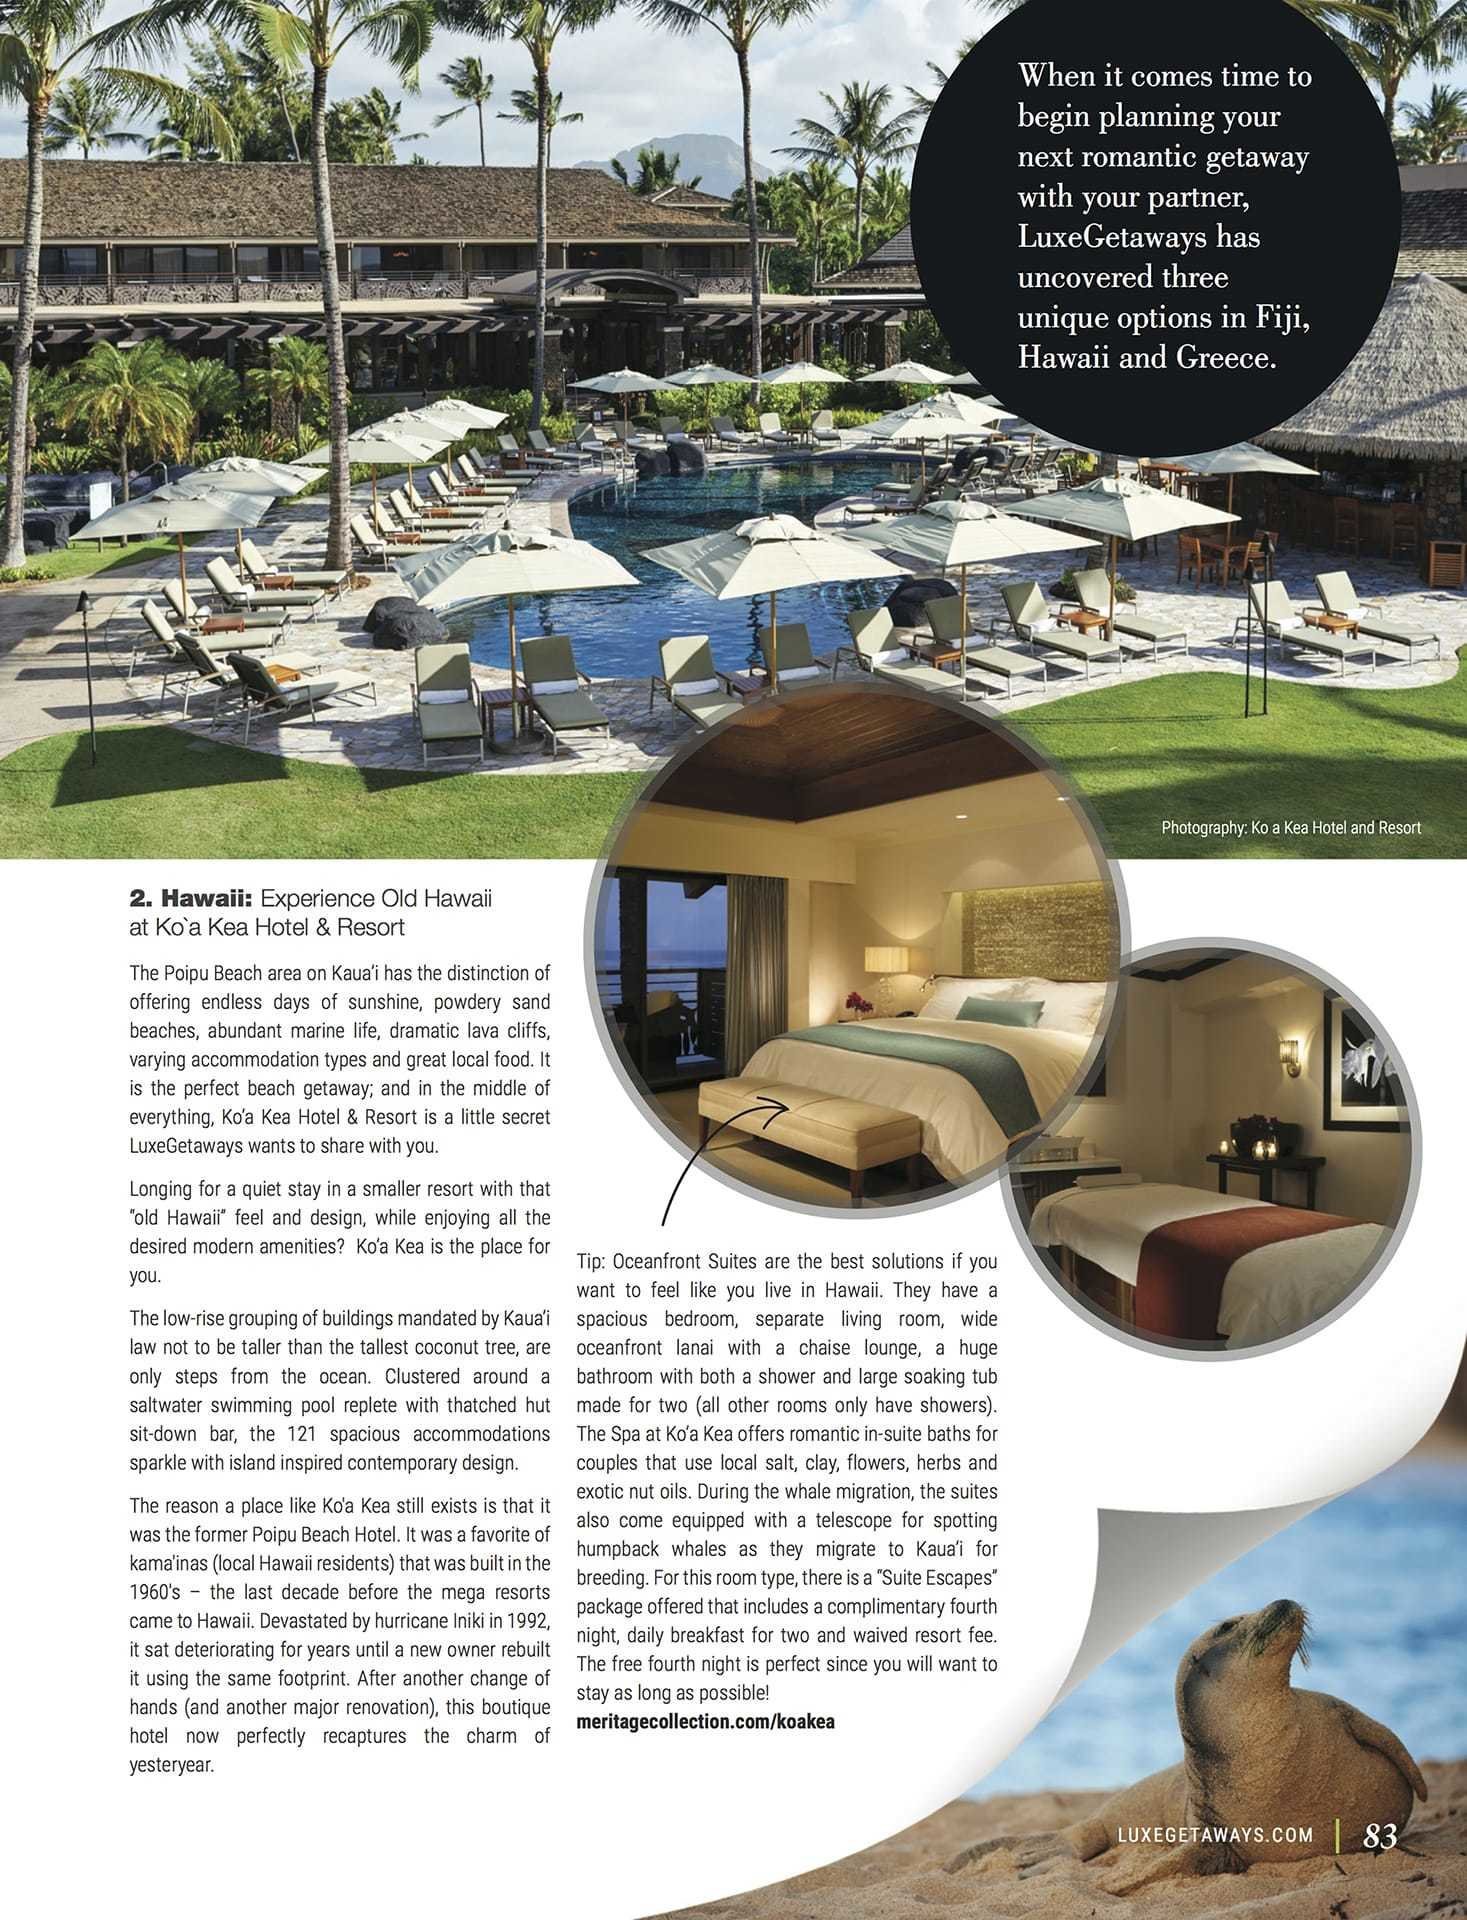 LuxeGetaways - Luxury Travel - Luxury Travel Magazine - Romantic Travel Getaways - Greece - Fiji - Hawaii